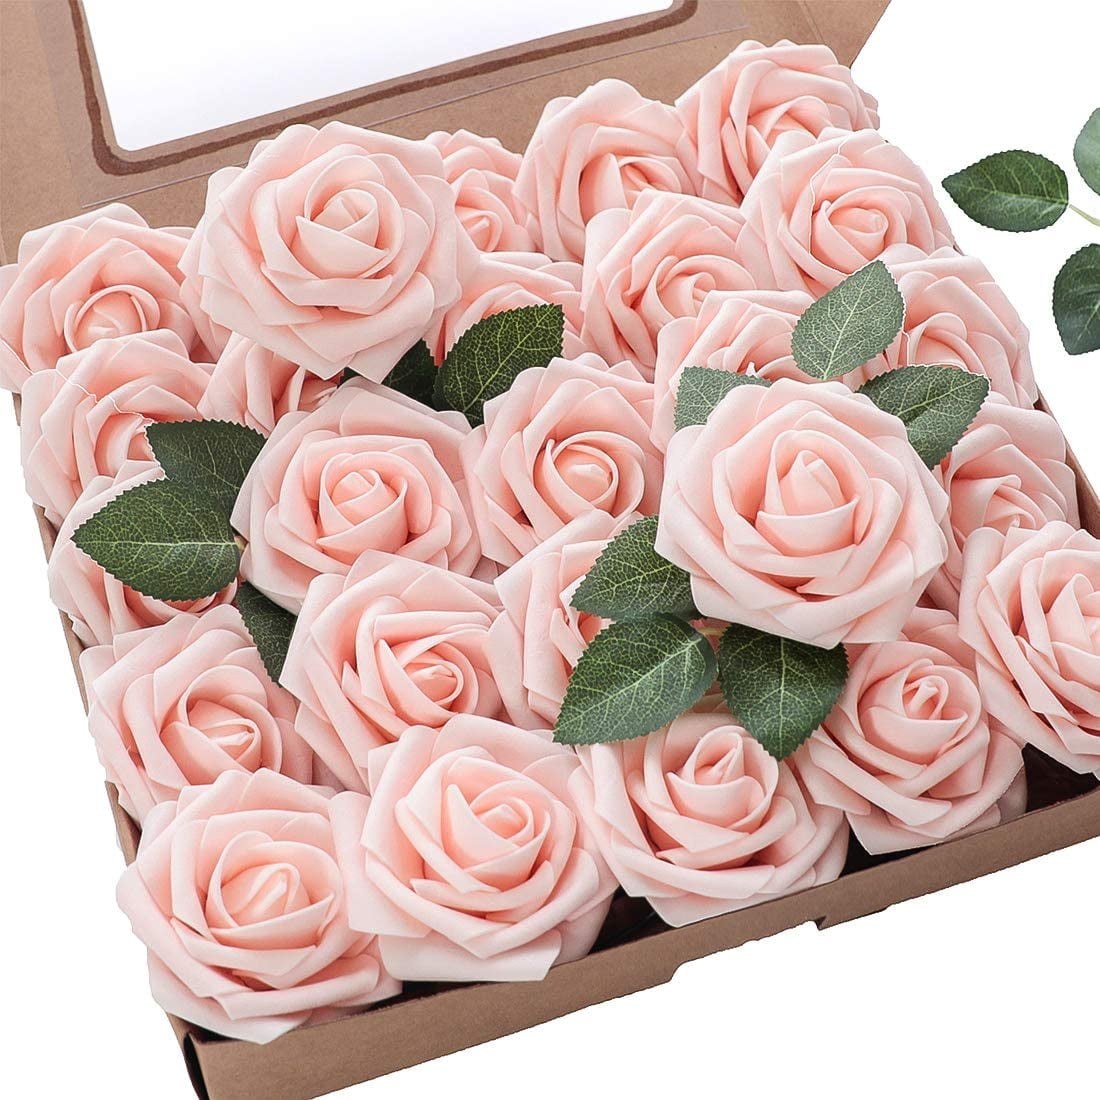 Artificial Fake Rose Bridal Bouquet For Home Room Decor INS Korean